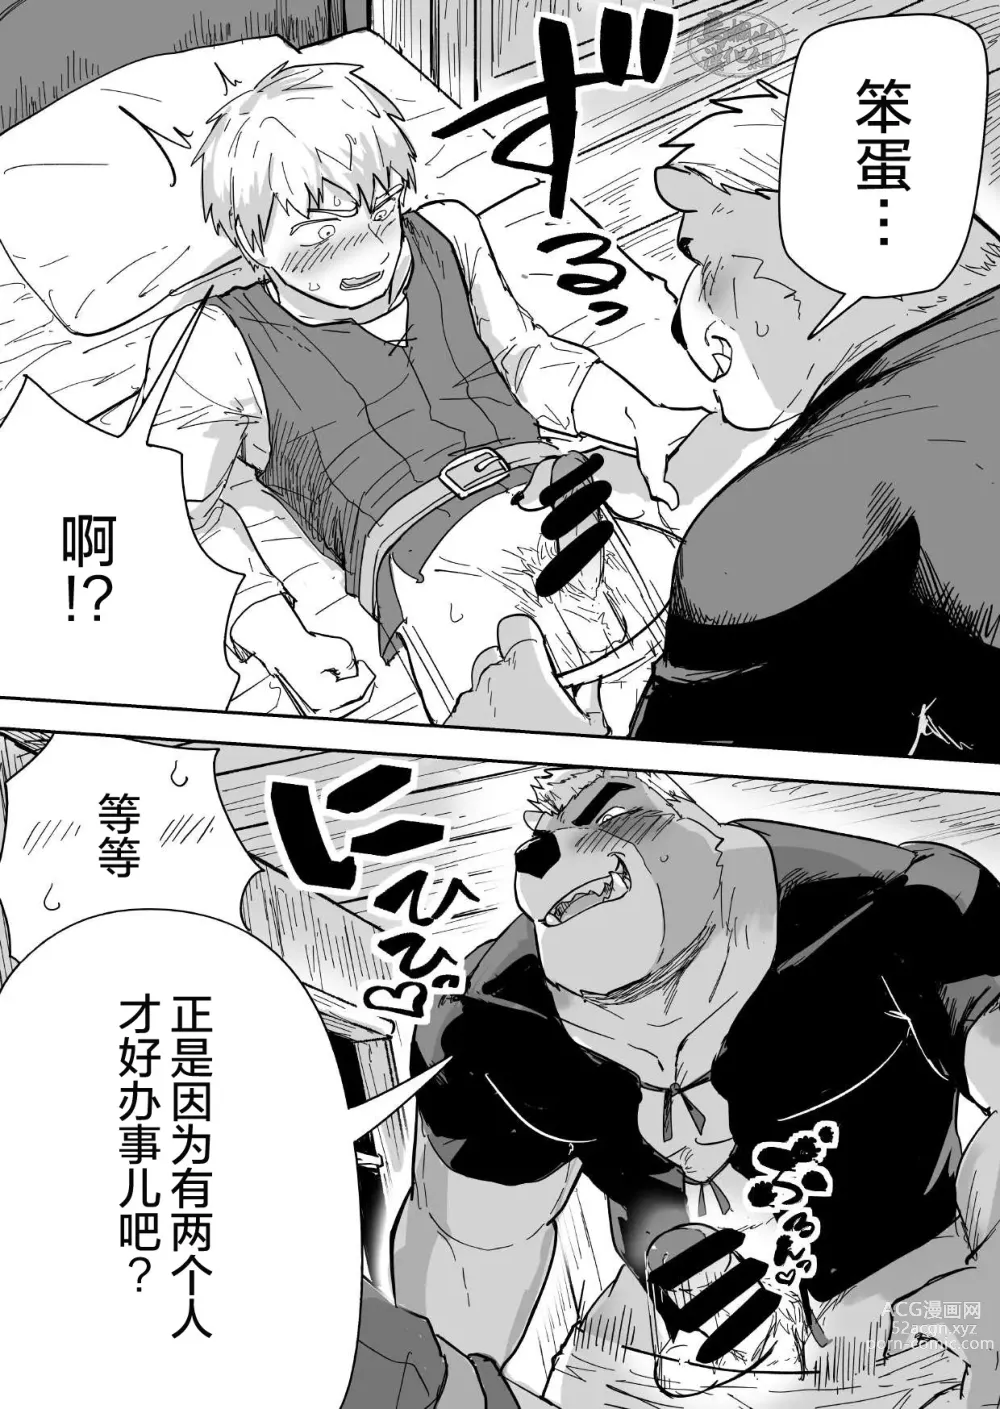 Page 12 of doujinshi Aibou Gachimuchi Kemonohito Senshi to Aibou Ijou ni Naru Hanashi｜ 当伙伴是强壮兽人战士之后和他超越友谊的故事